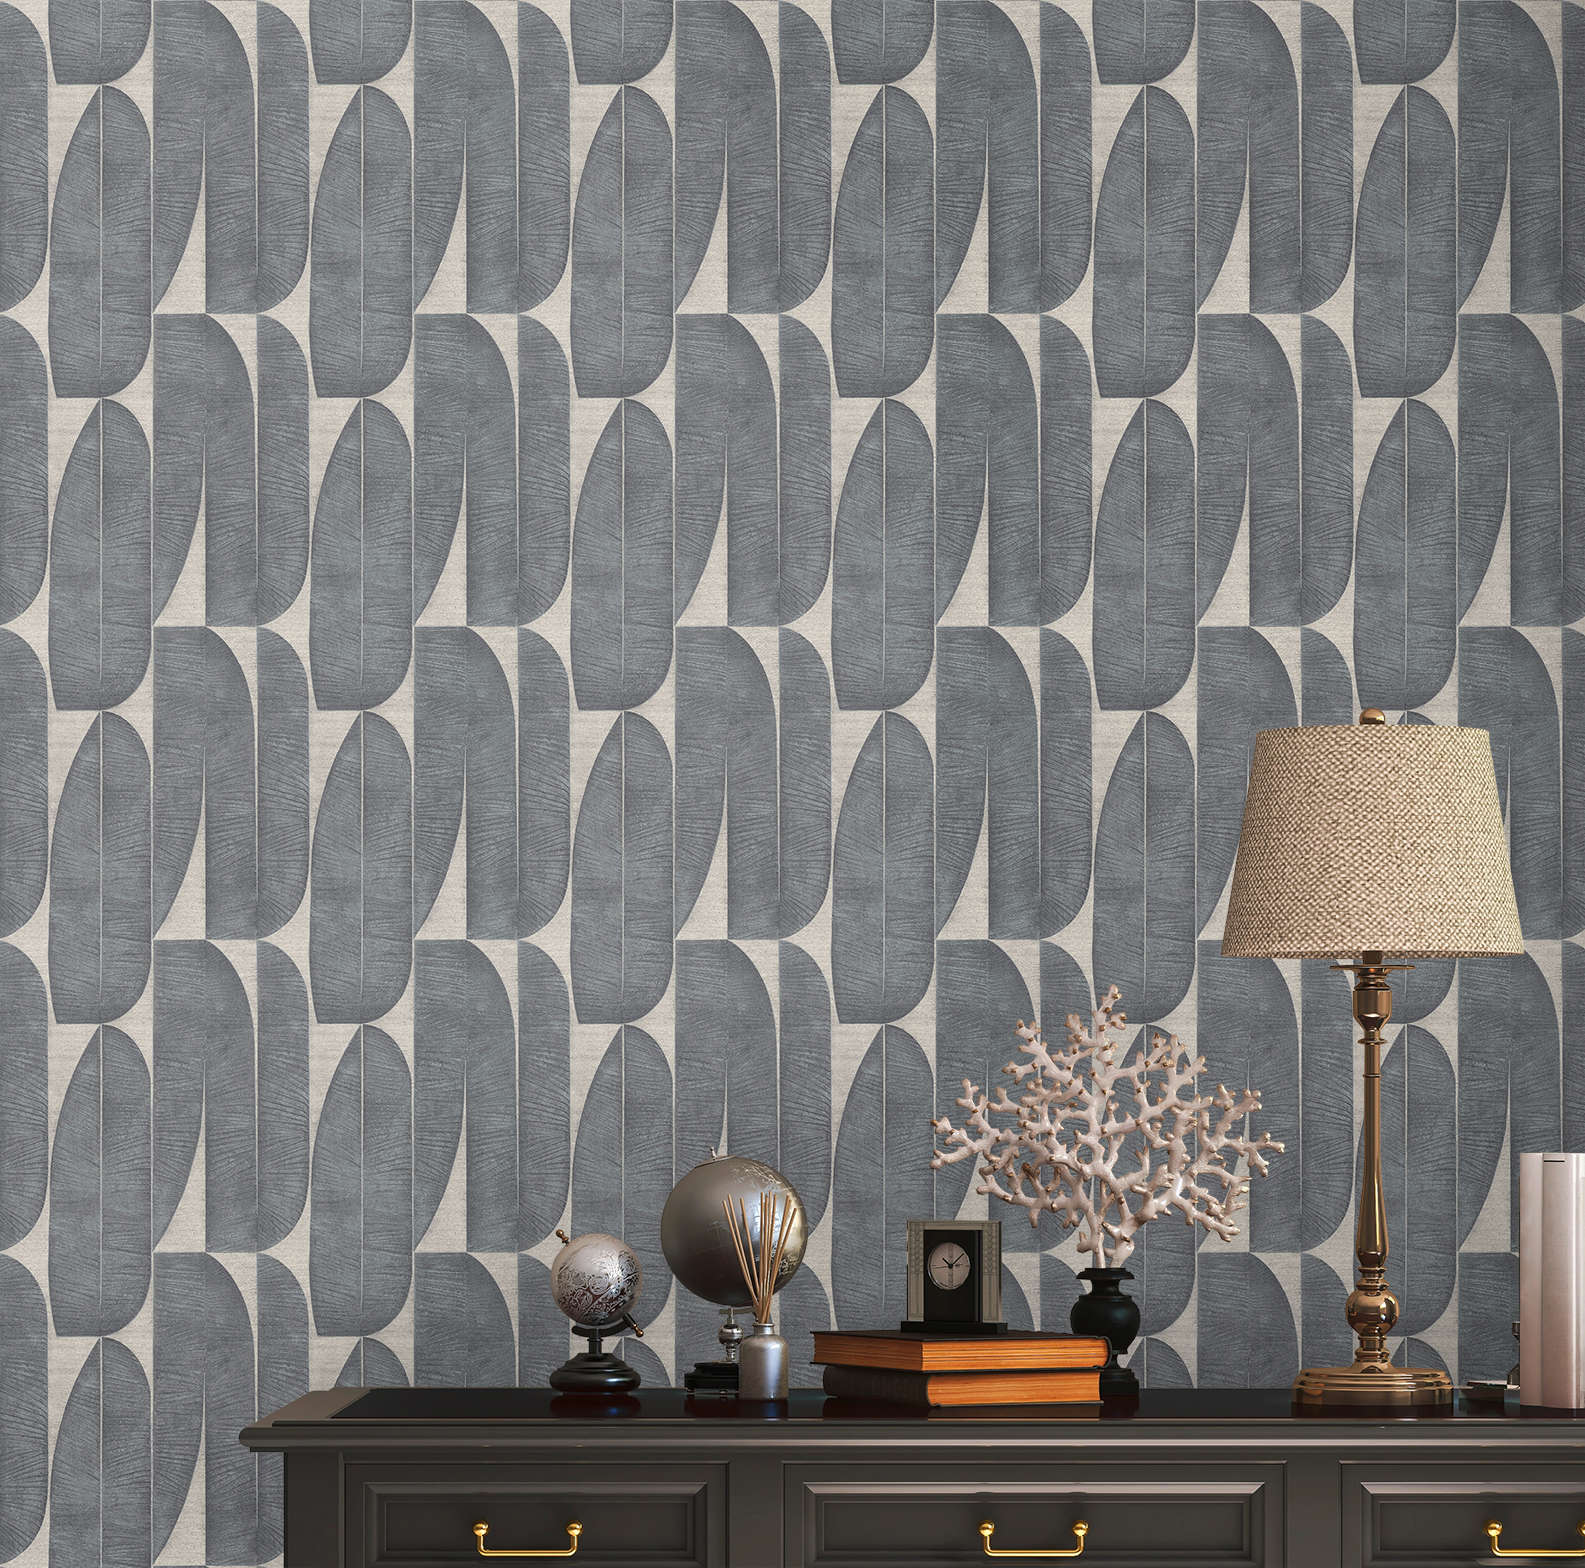             Non-woven wallpaper with geometric pattern in leaf look - beige, black
        